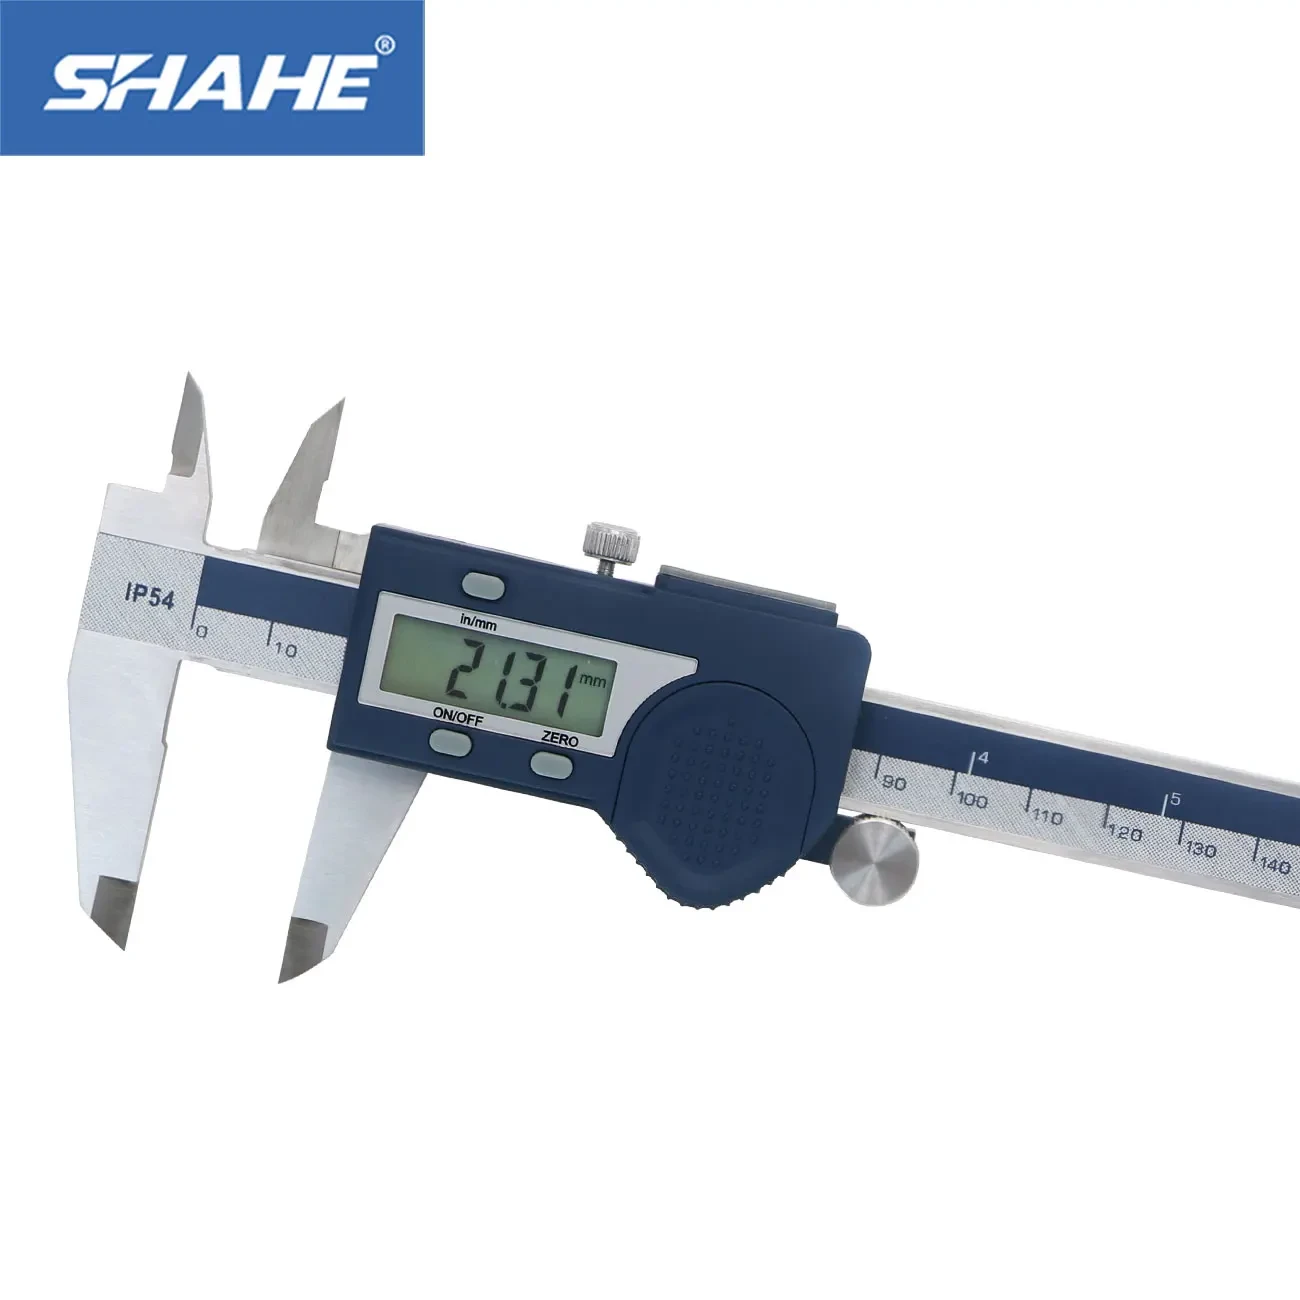 SHAHE IP54 Waterproof Digital Calipers Stainless Steel Electronic Vernier Caliper 150 mm Measuring Tools Vernier Calipers